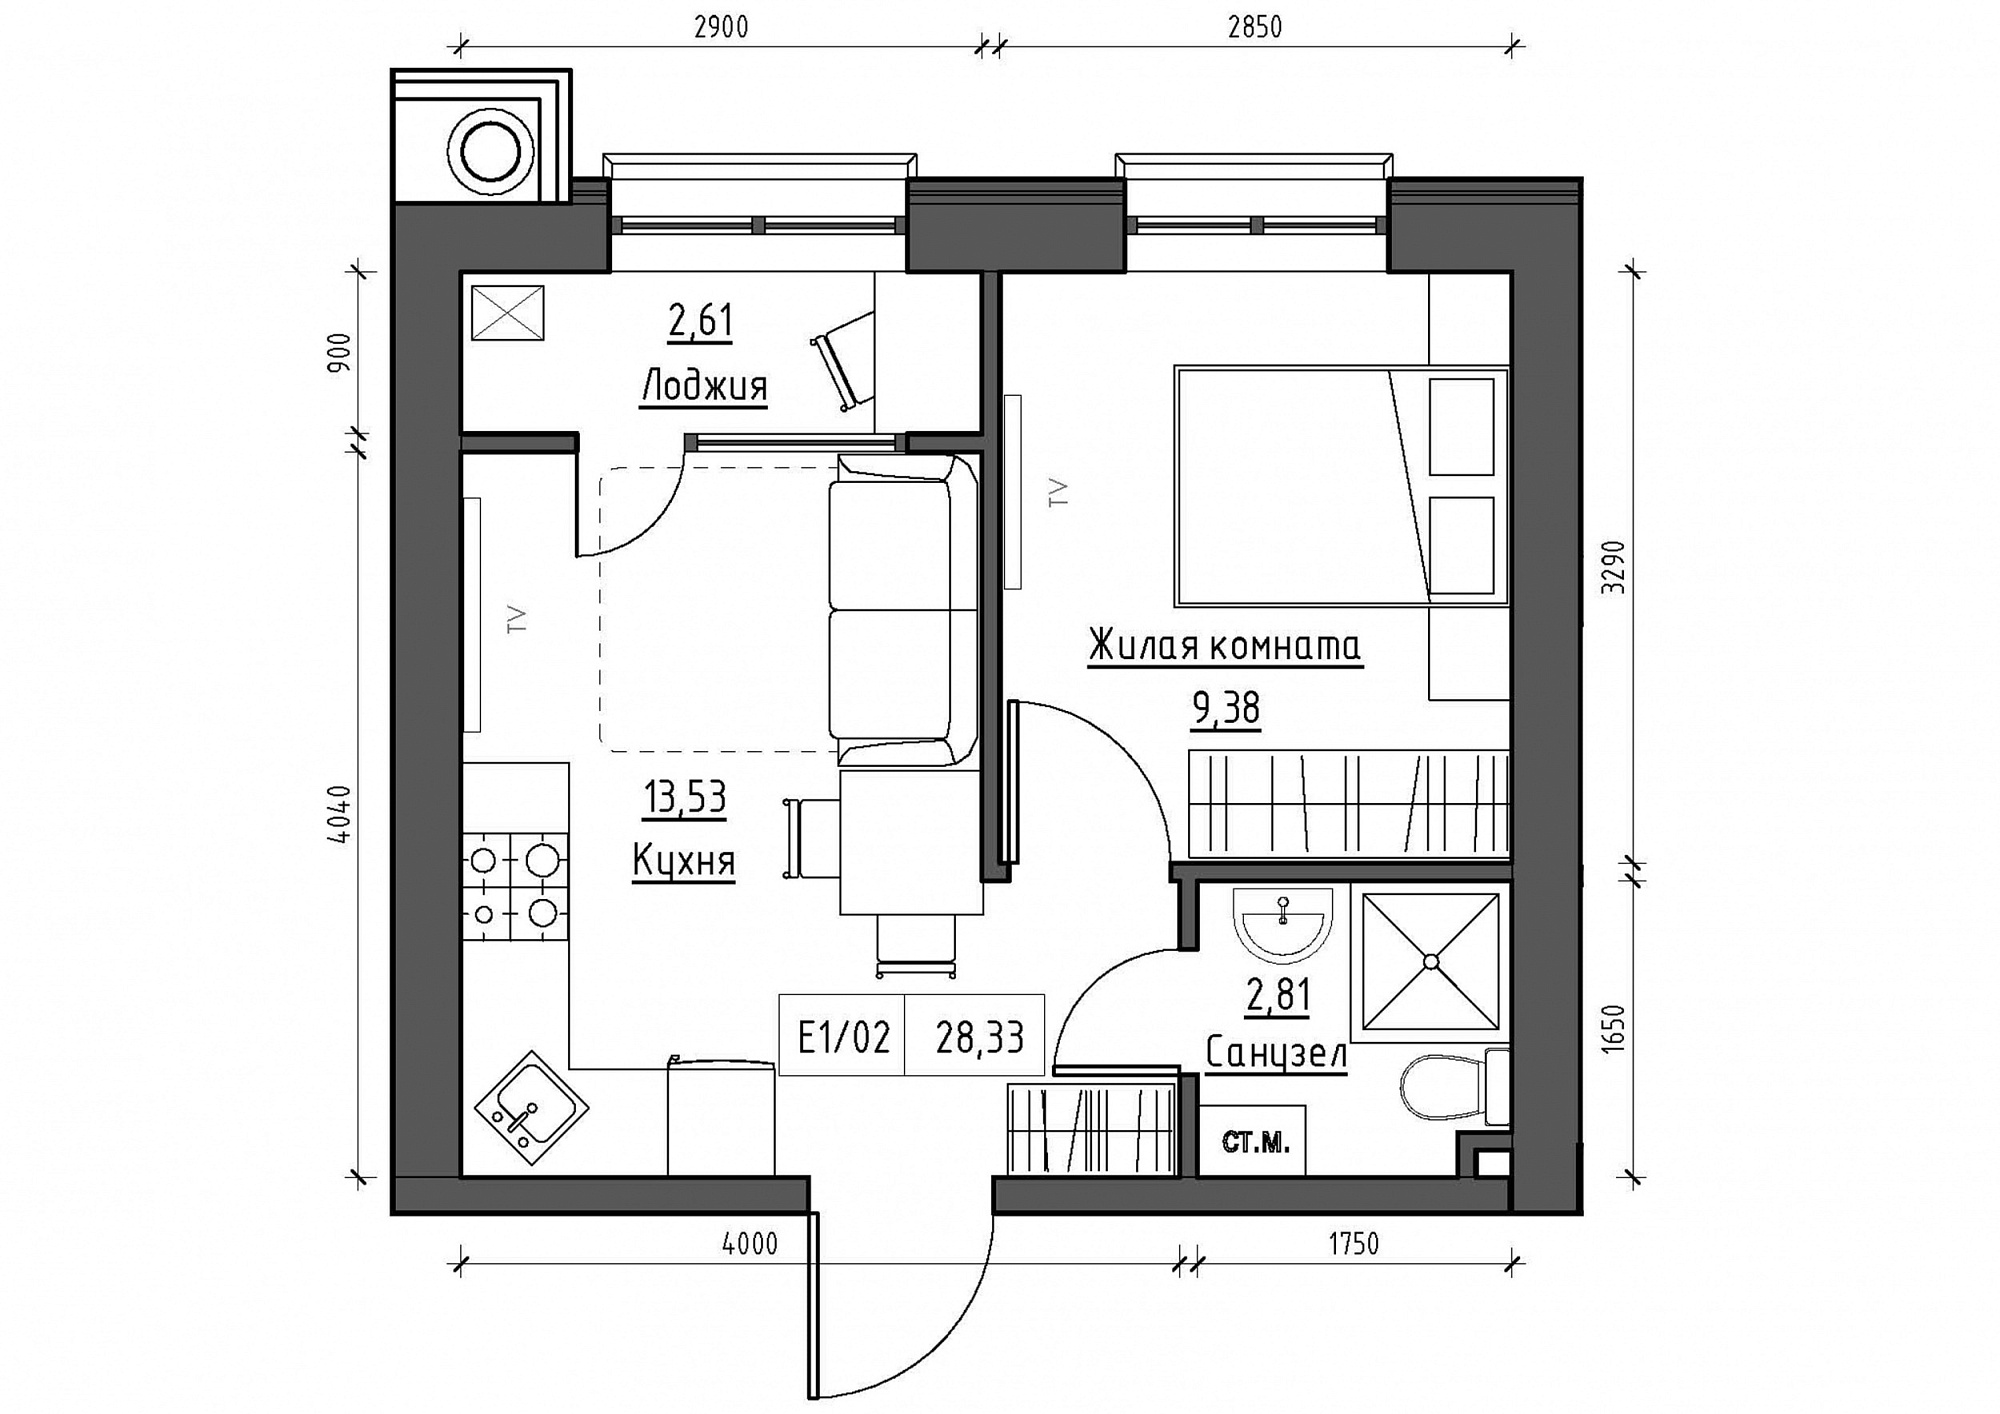 Planning 1-rm flats area 28.33m2, KS-011-02/0015.